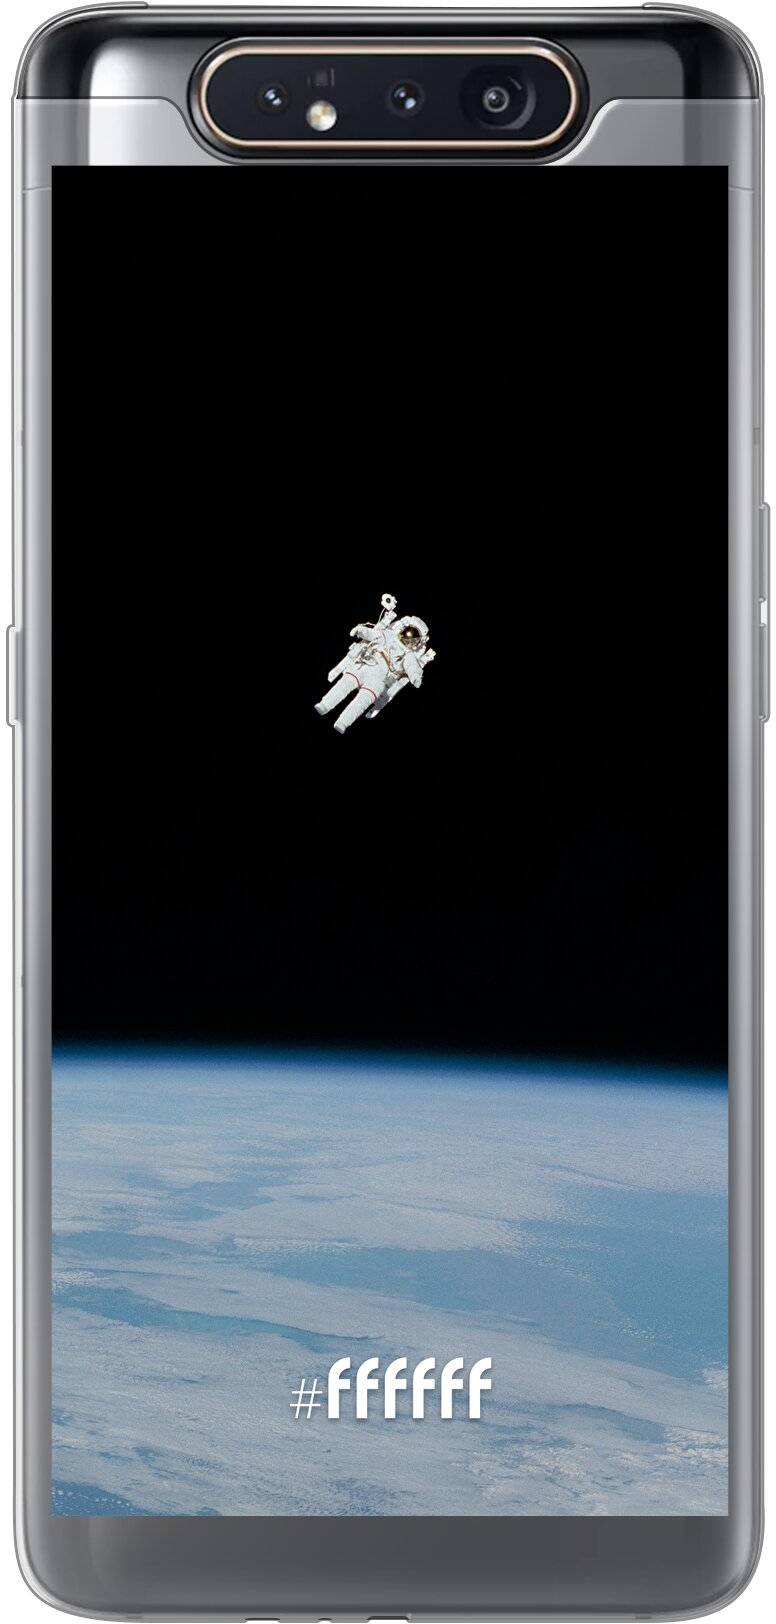 Spacewalk Galaxy A80